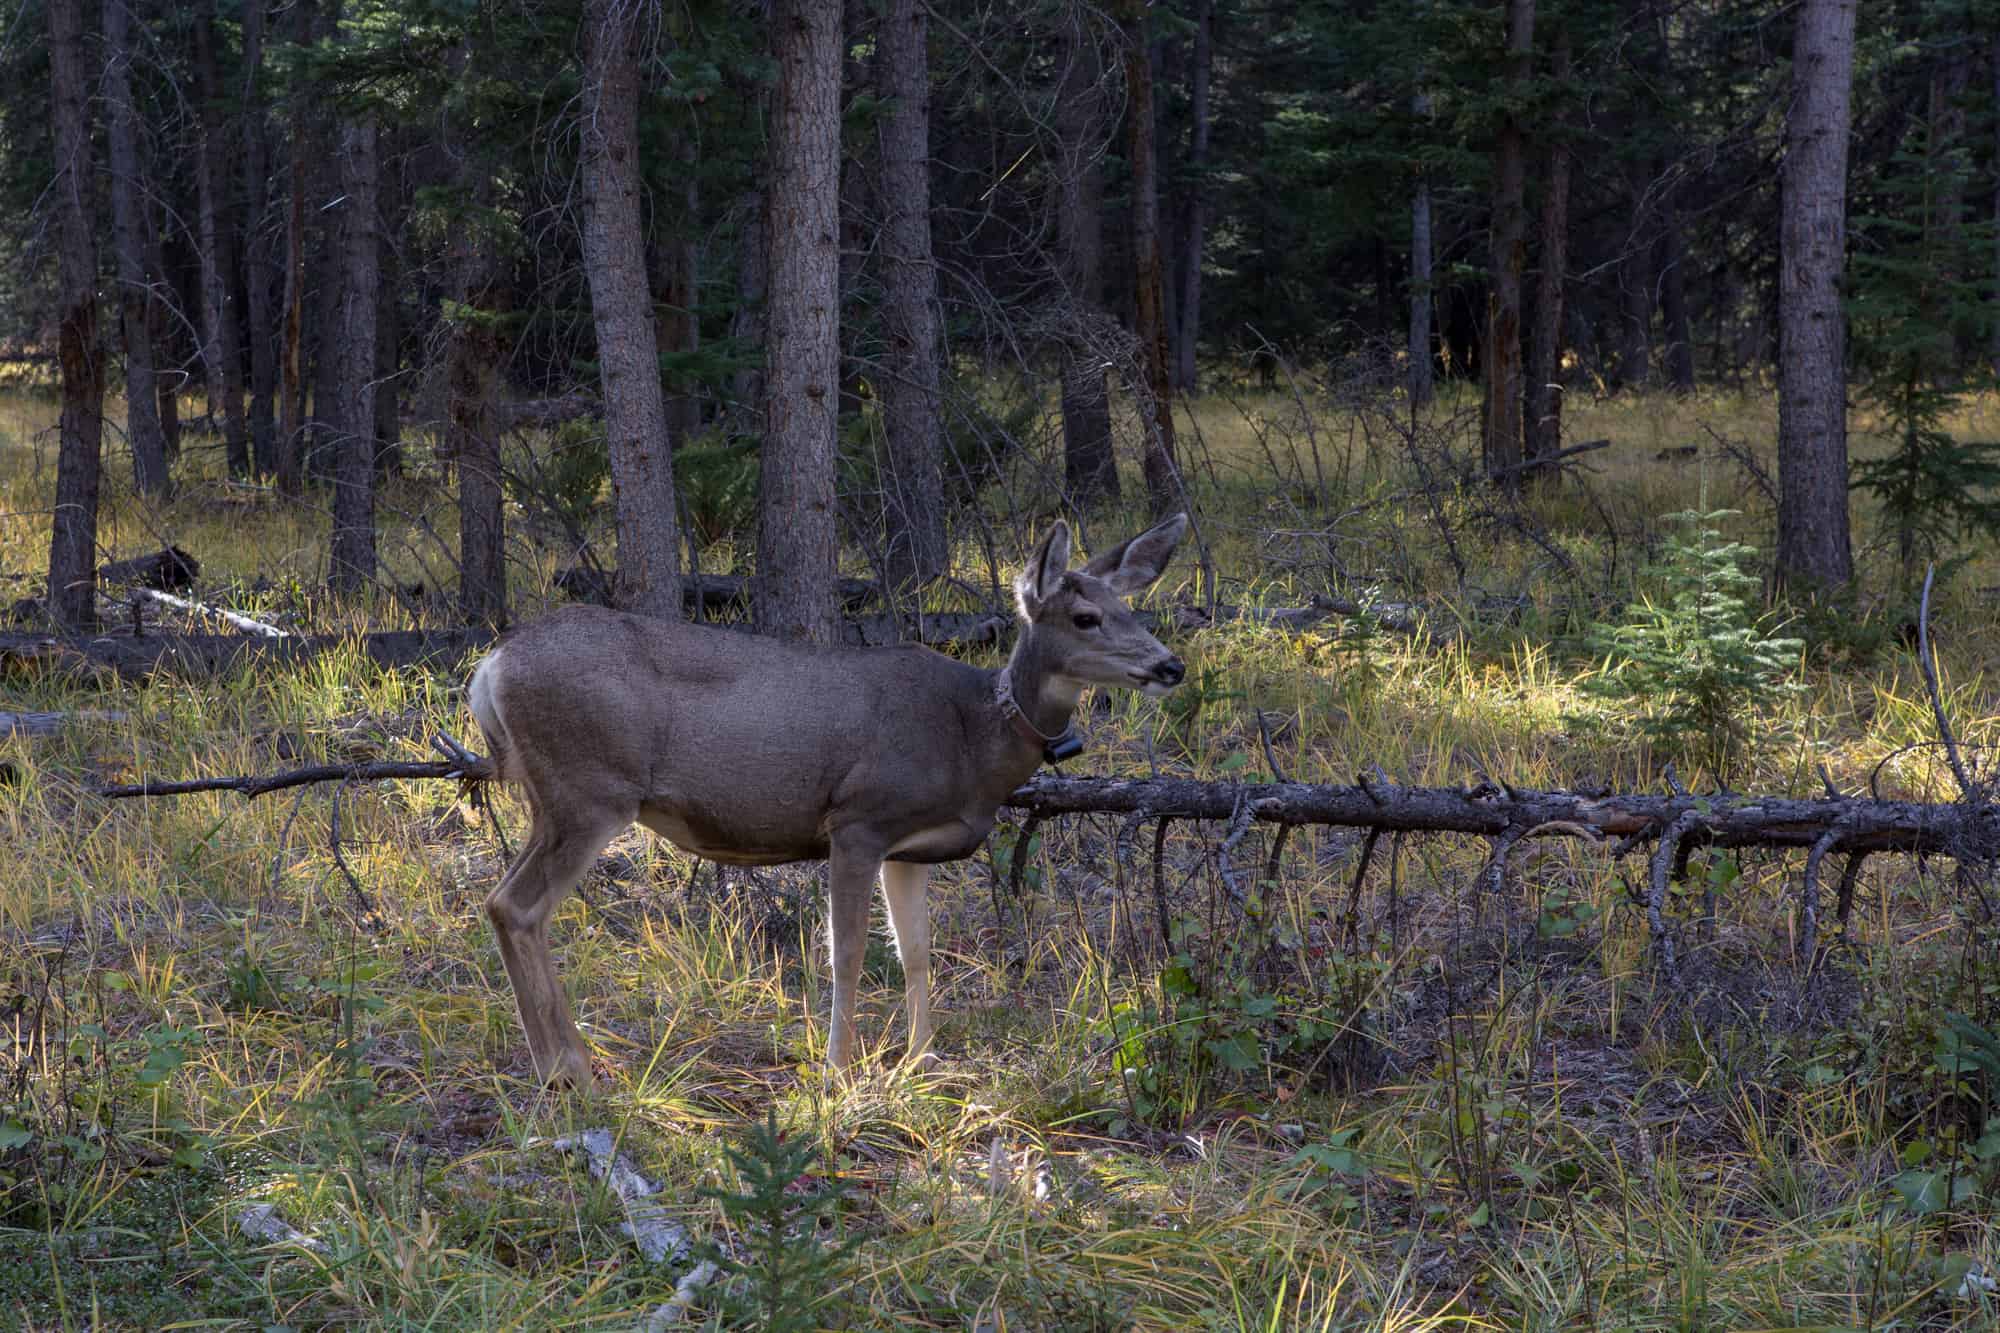 one of the most common wildlife in jasper are deer, including this mule deer